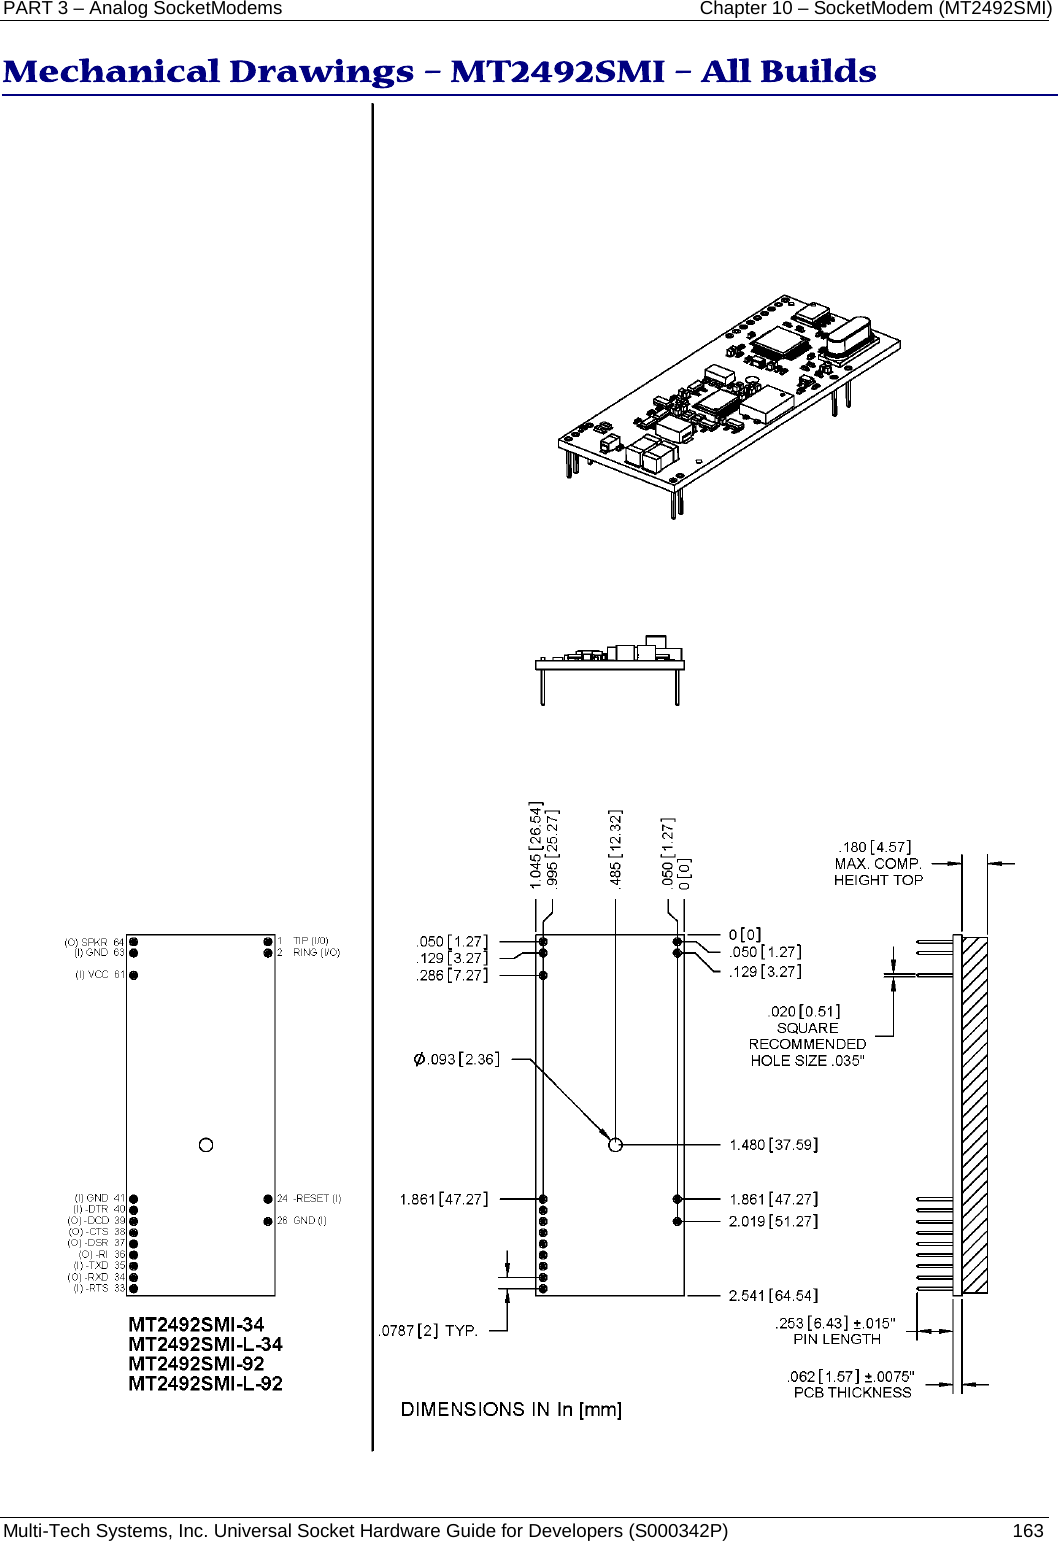 PART 3 – Analog SocketModems     Chapter 10 – SocketModem (MT2492SMI) Multi-Tech Systems, Inc. Universal Socket Hardware Guide for Developers (S000342P)  163  Mechanical Drawings – MT2492SMI – All Builds     